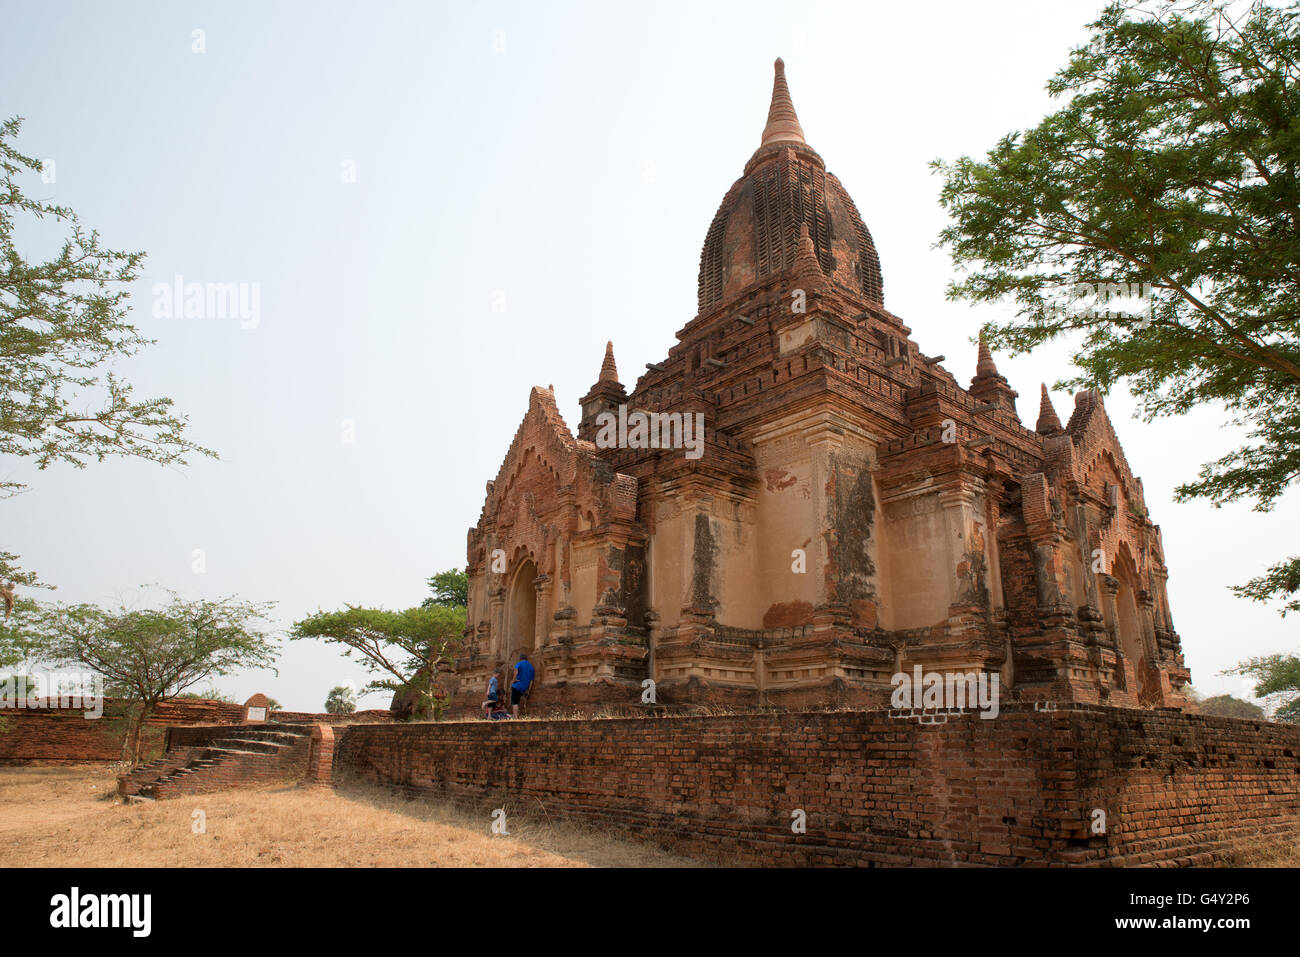 Thambula Pagoda (Paya), Old Bagan Archeological Zone, Mandalay Region, Myanmar Stock Photo